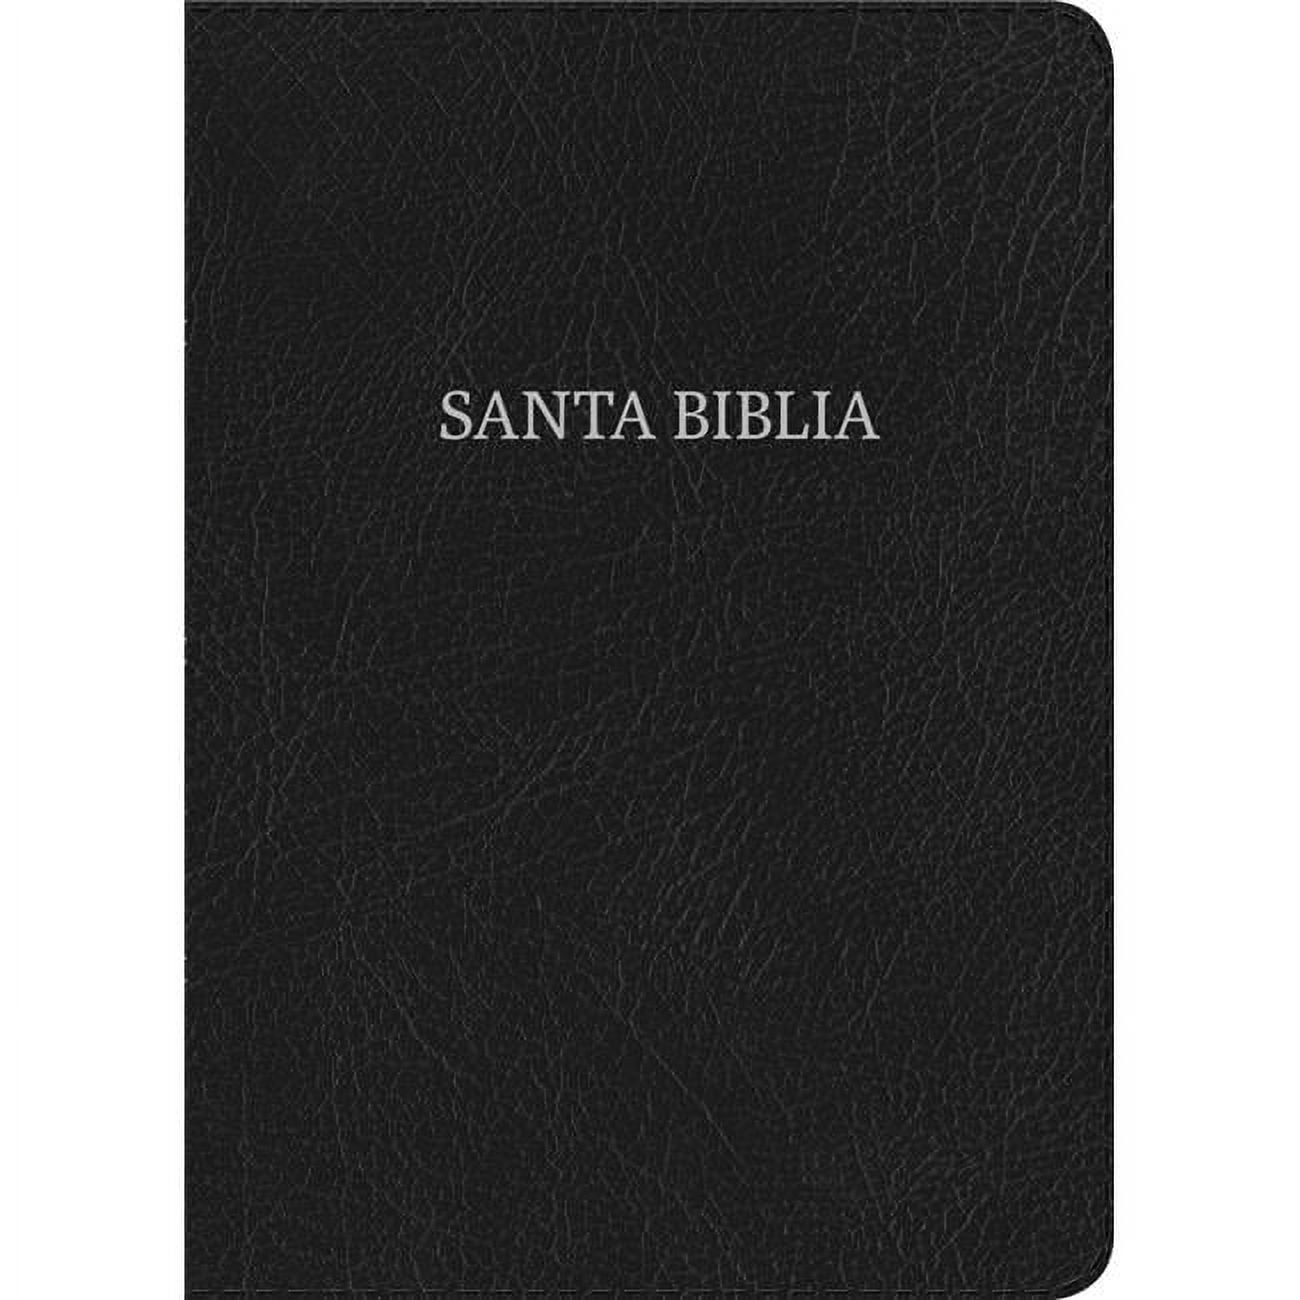 Picture of B&H Publishing 199005 RVR 1960 Large Print Compact Bible - Biblia Compacta Letra Grande&#44; Black Bonded Leather